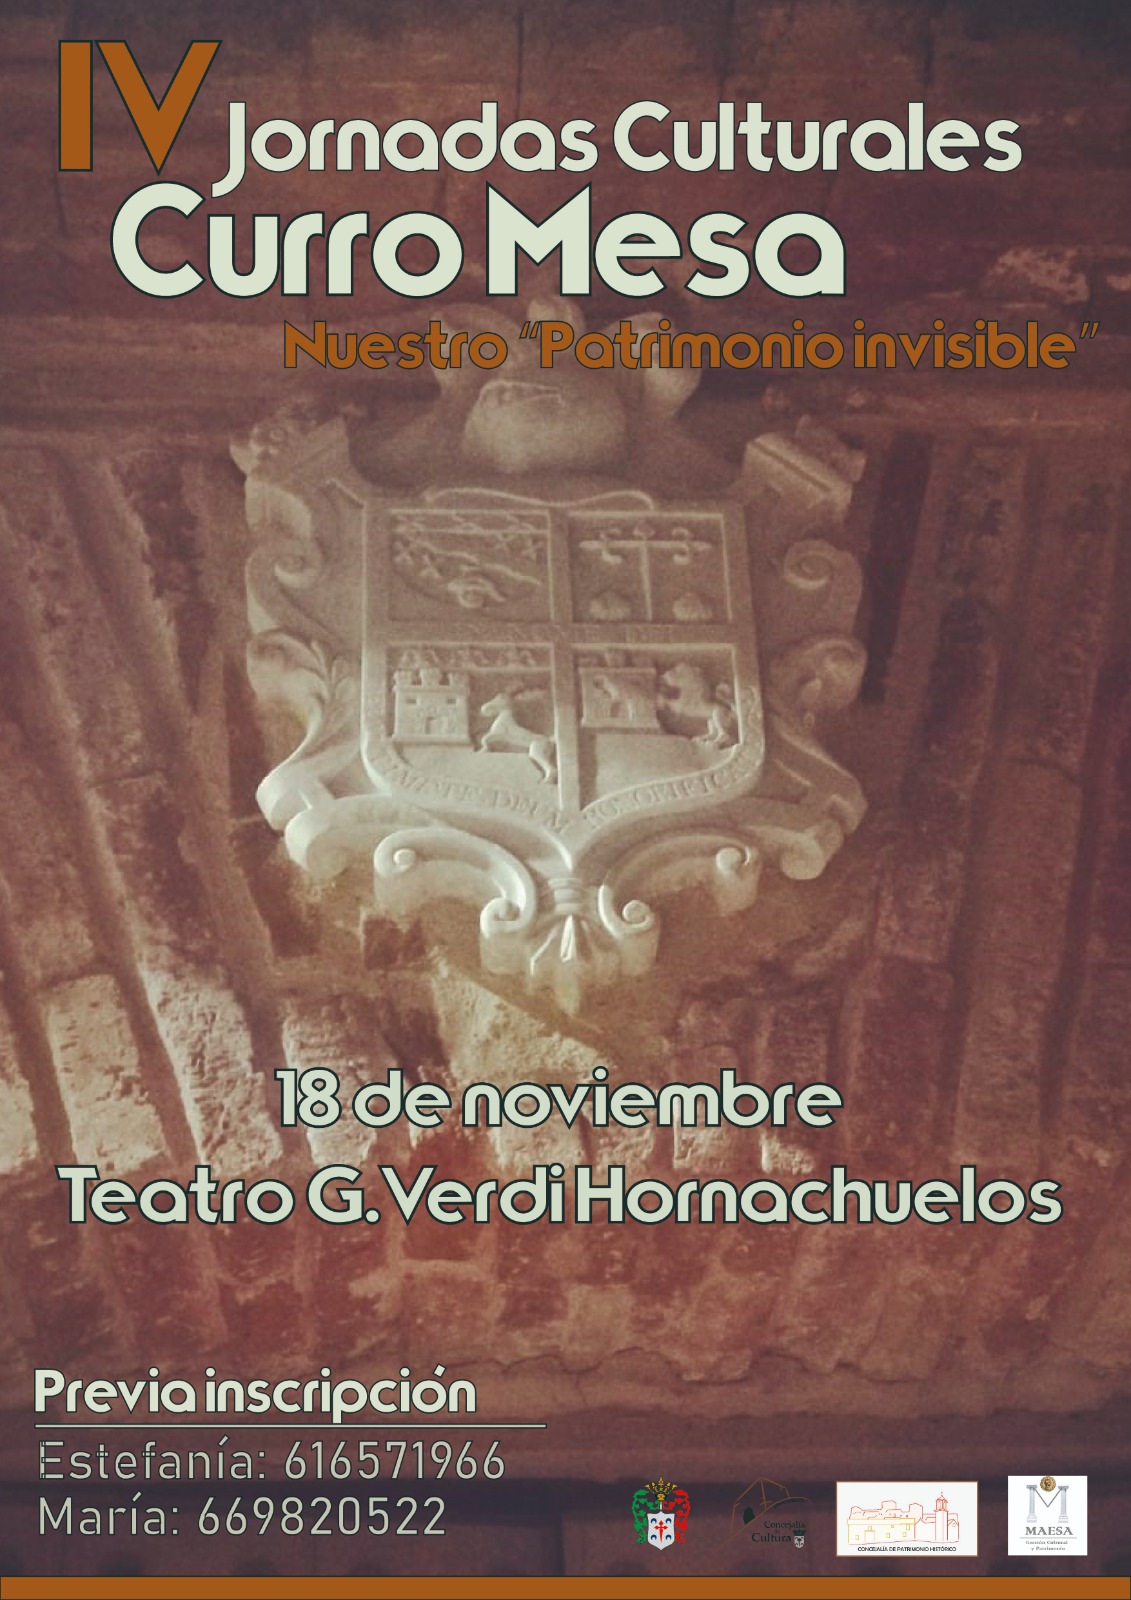 IV Jornadas Culturales Curro Mesa.